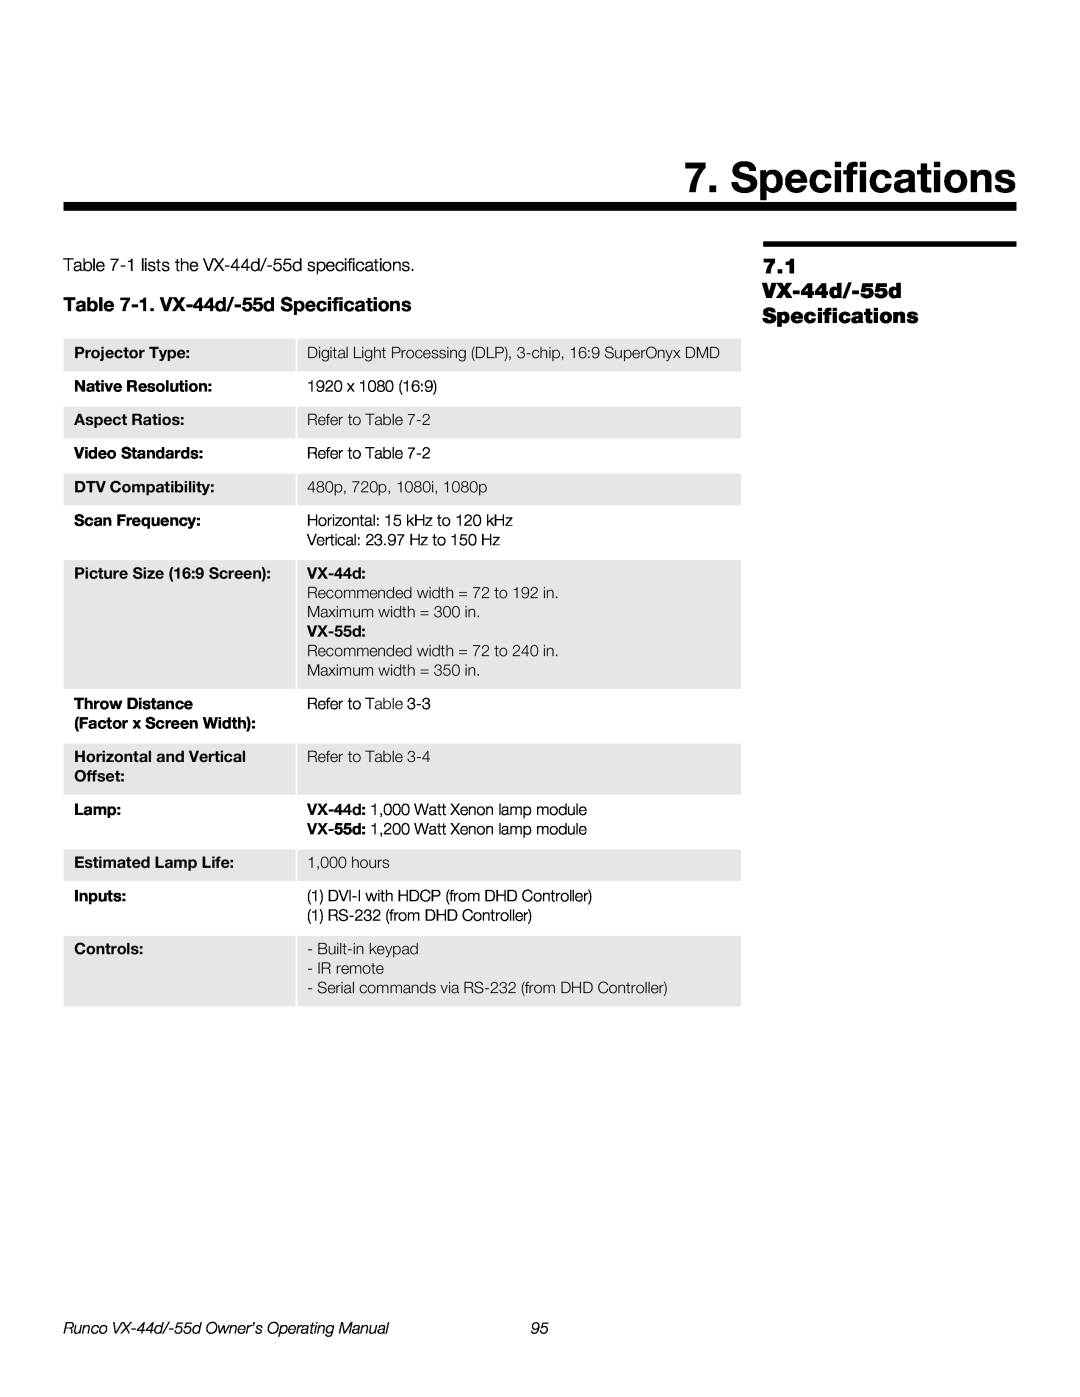 Runco 1080p 7.1 VX-44d/-55d Specifications, 1. VX-44d/-55d Specifications, Runco VX-44d/-55d Owner’s Operating Manual 